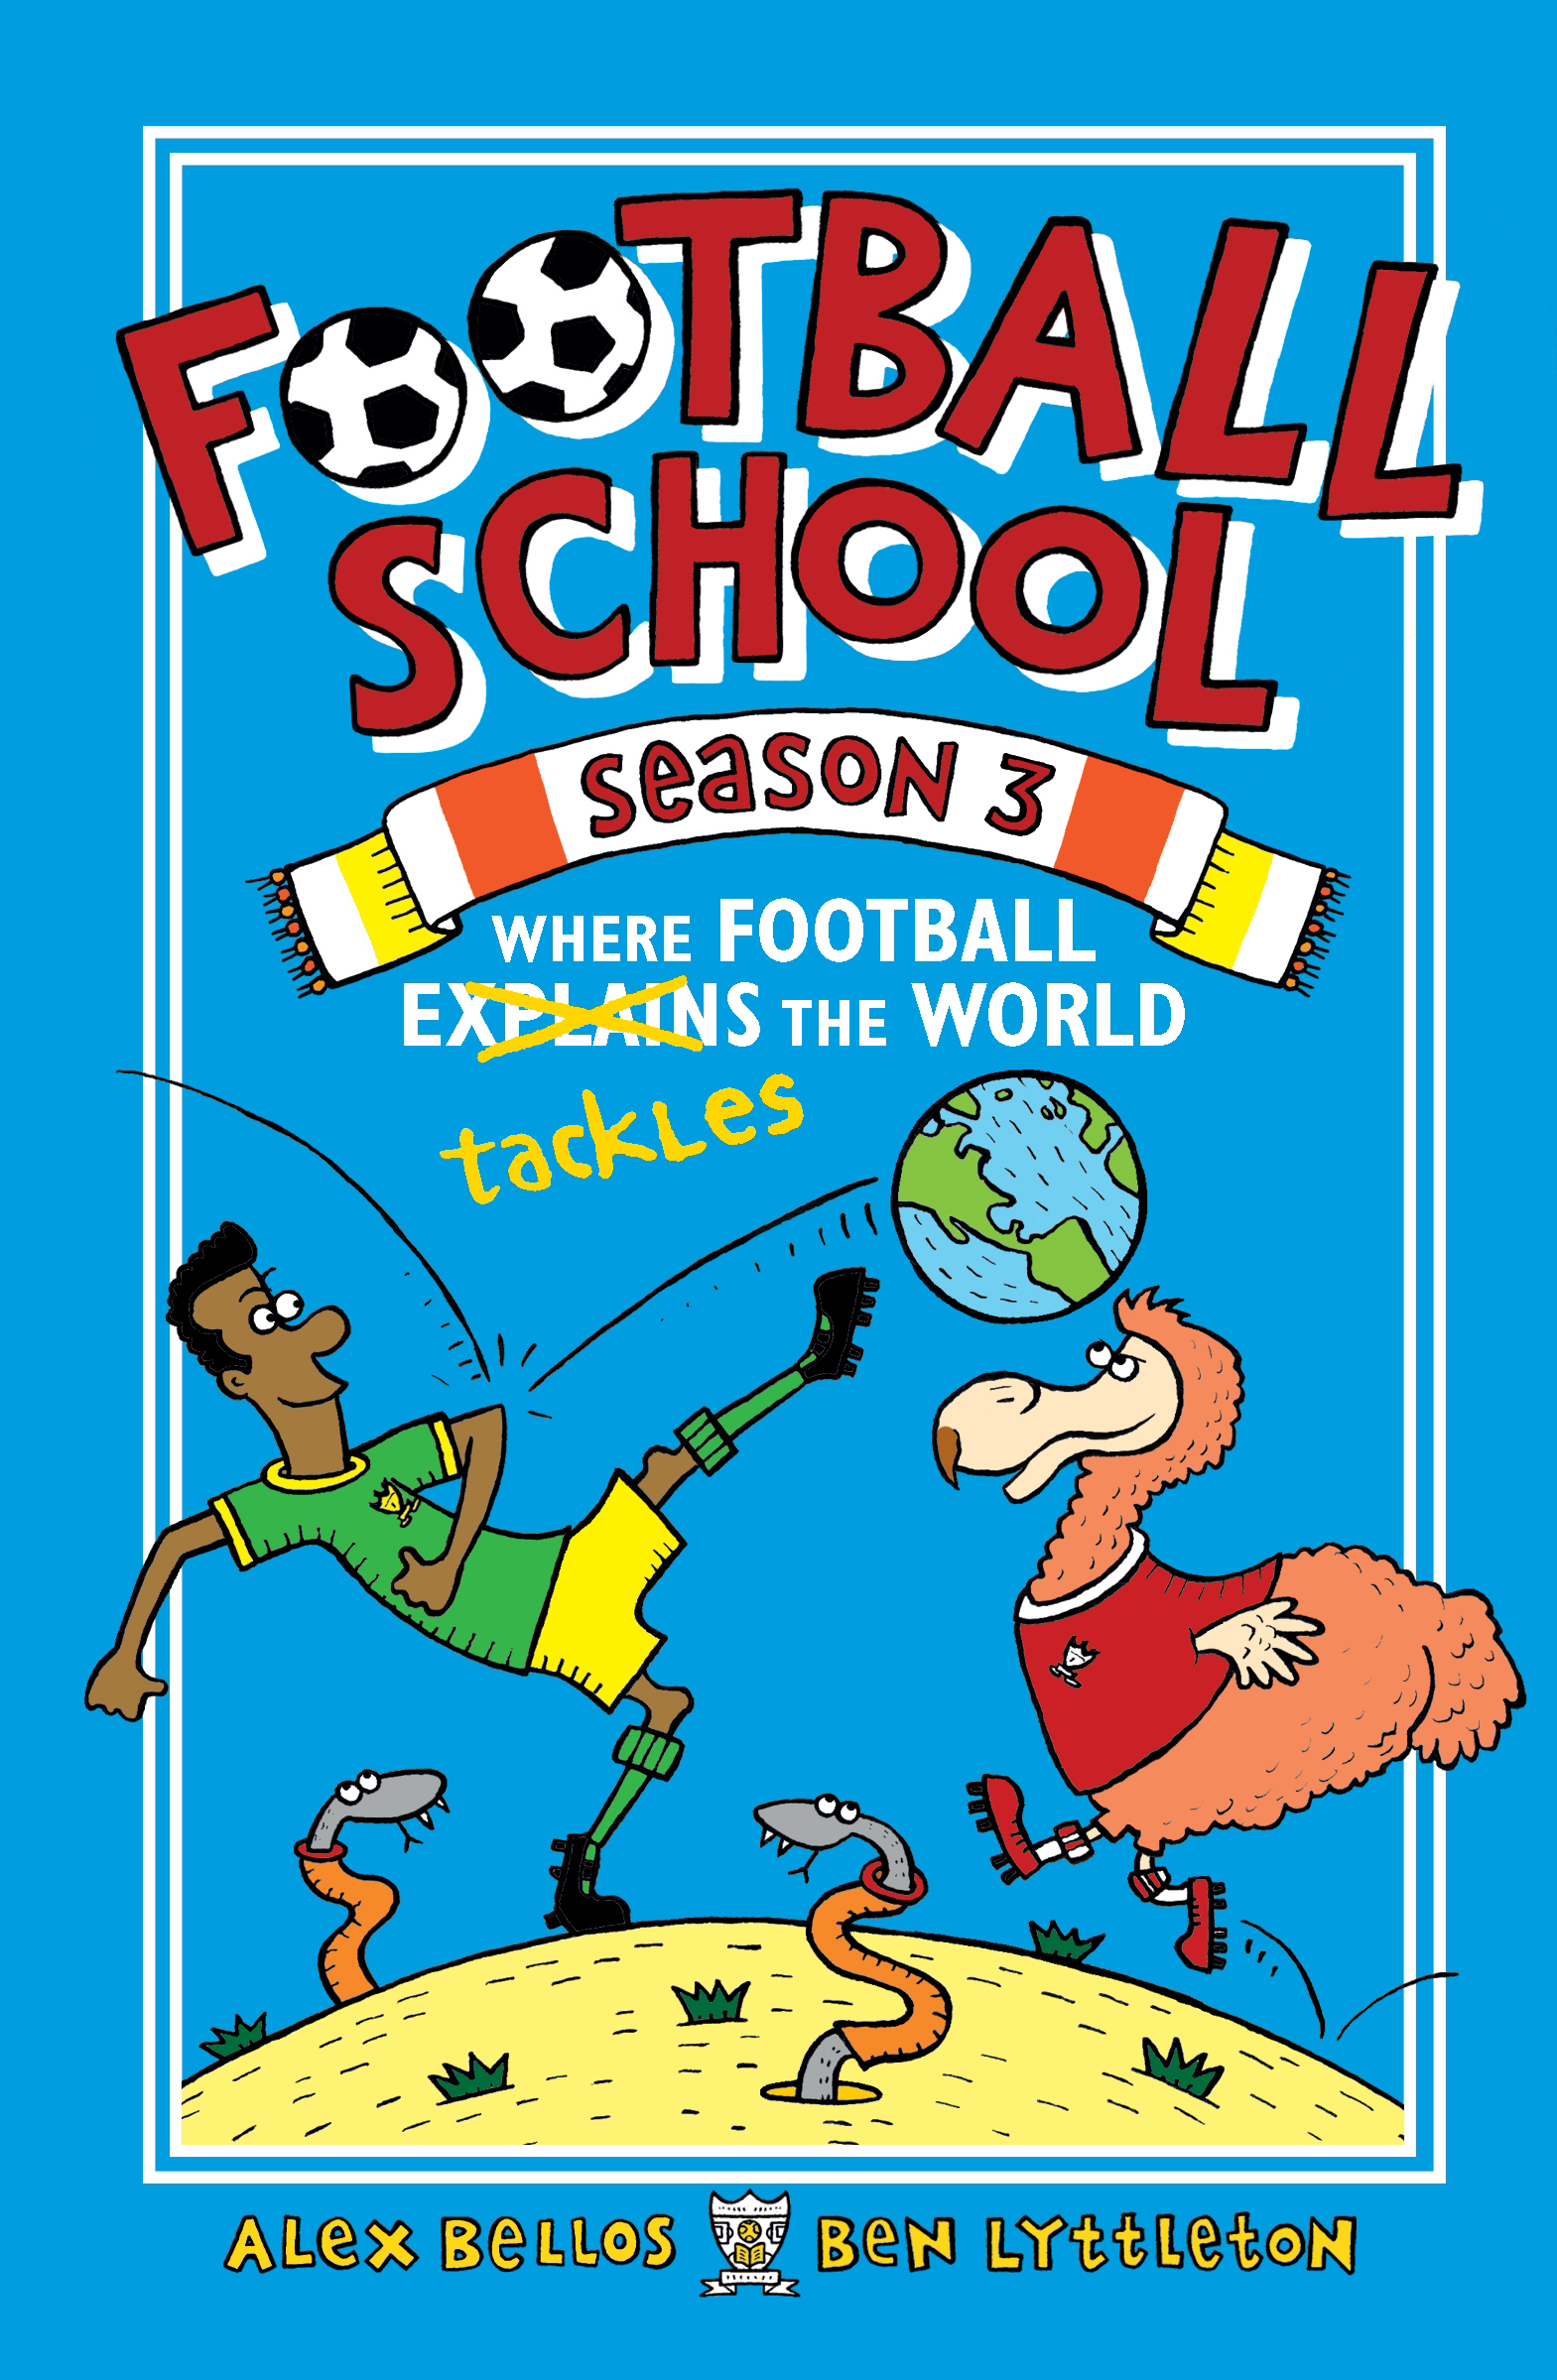 Football-School-Season-3-Where-Football-Explains-the-World